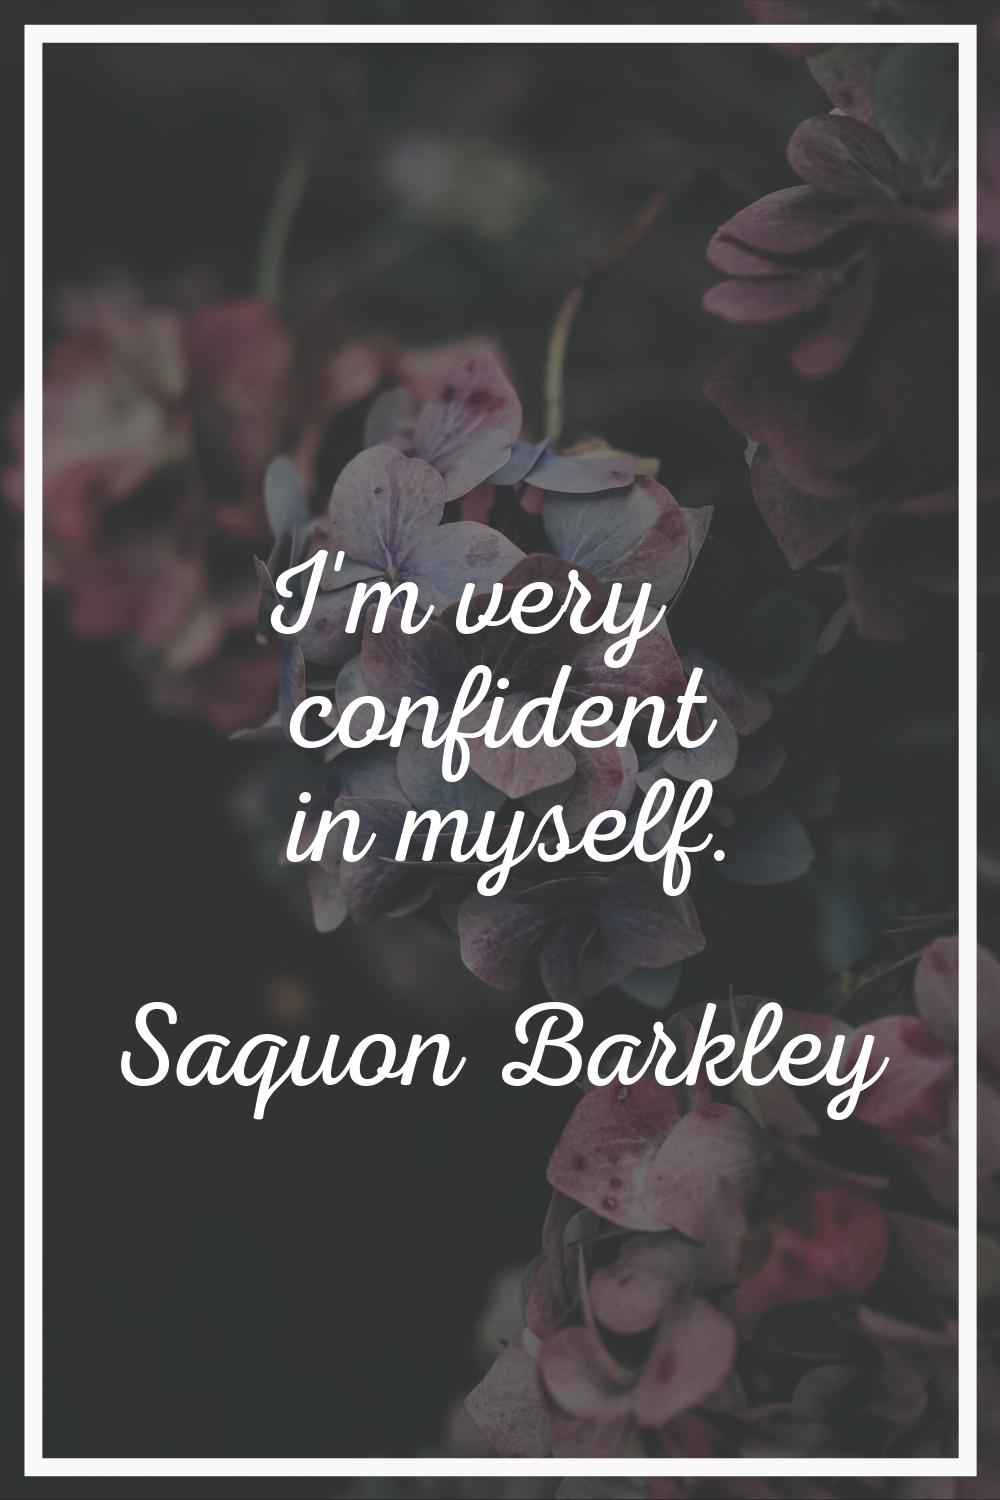 I'm very confident in myself.